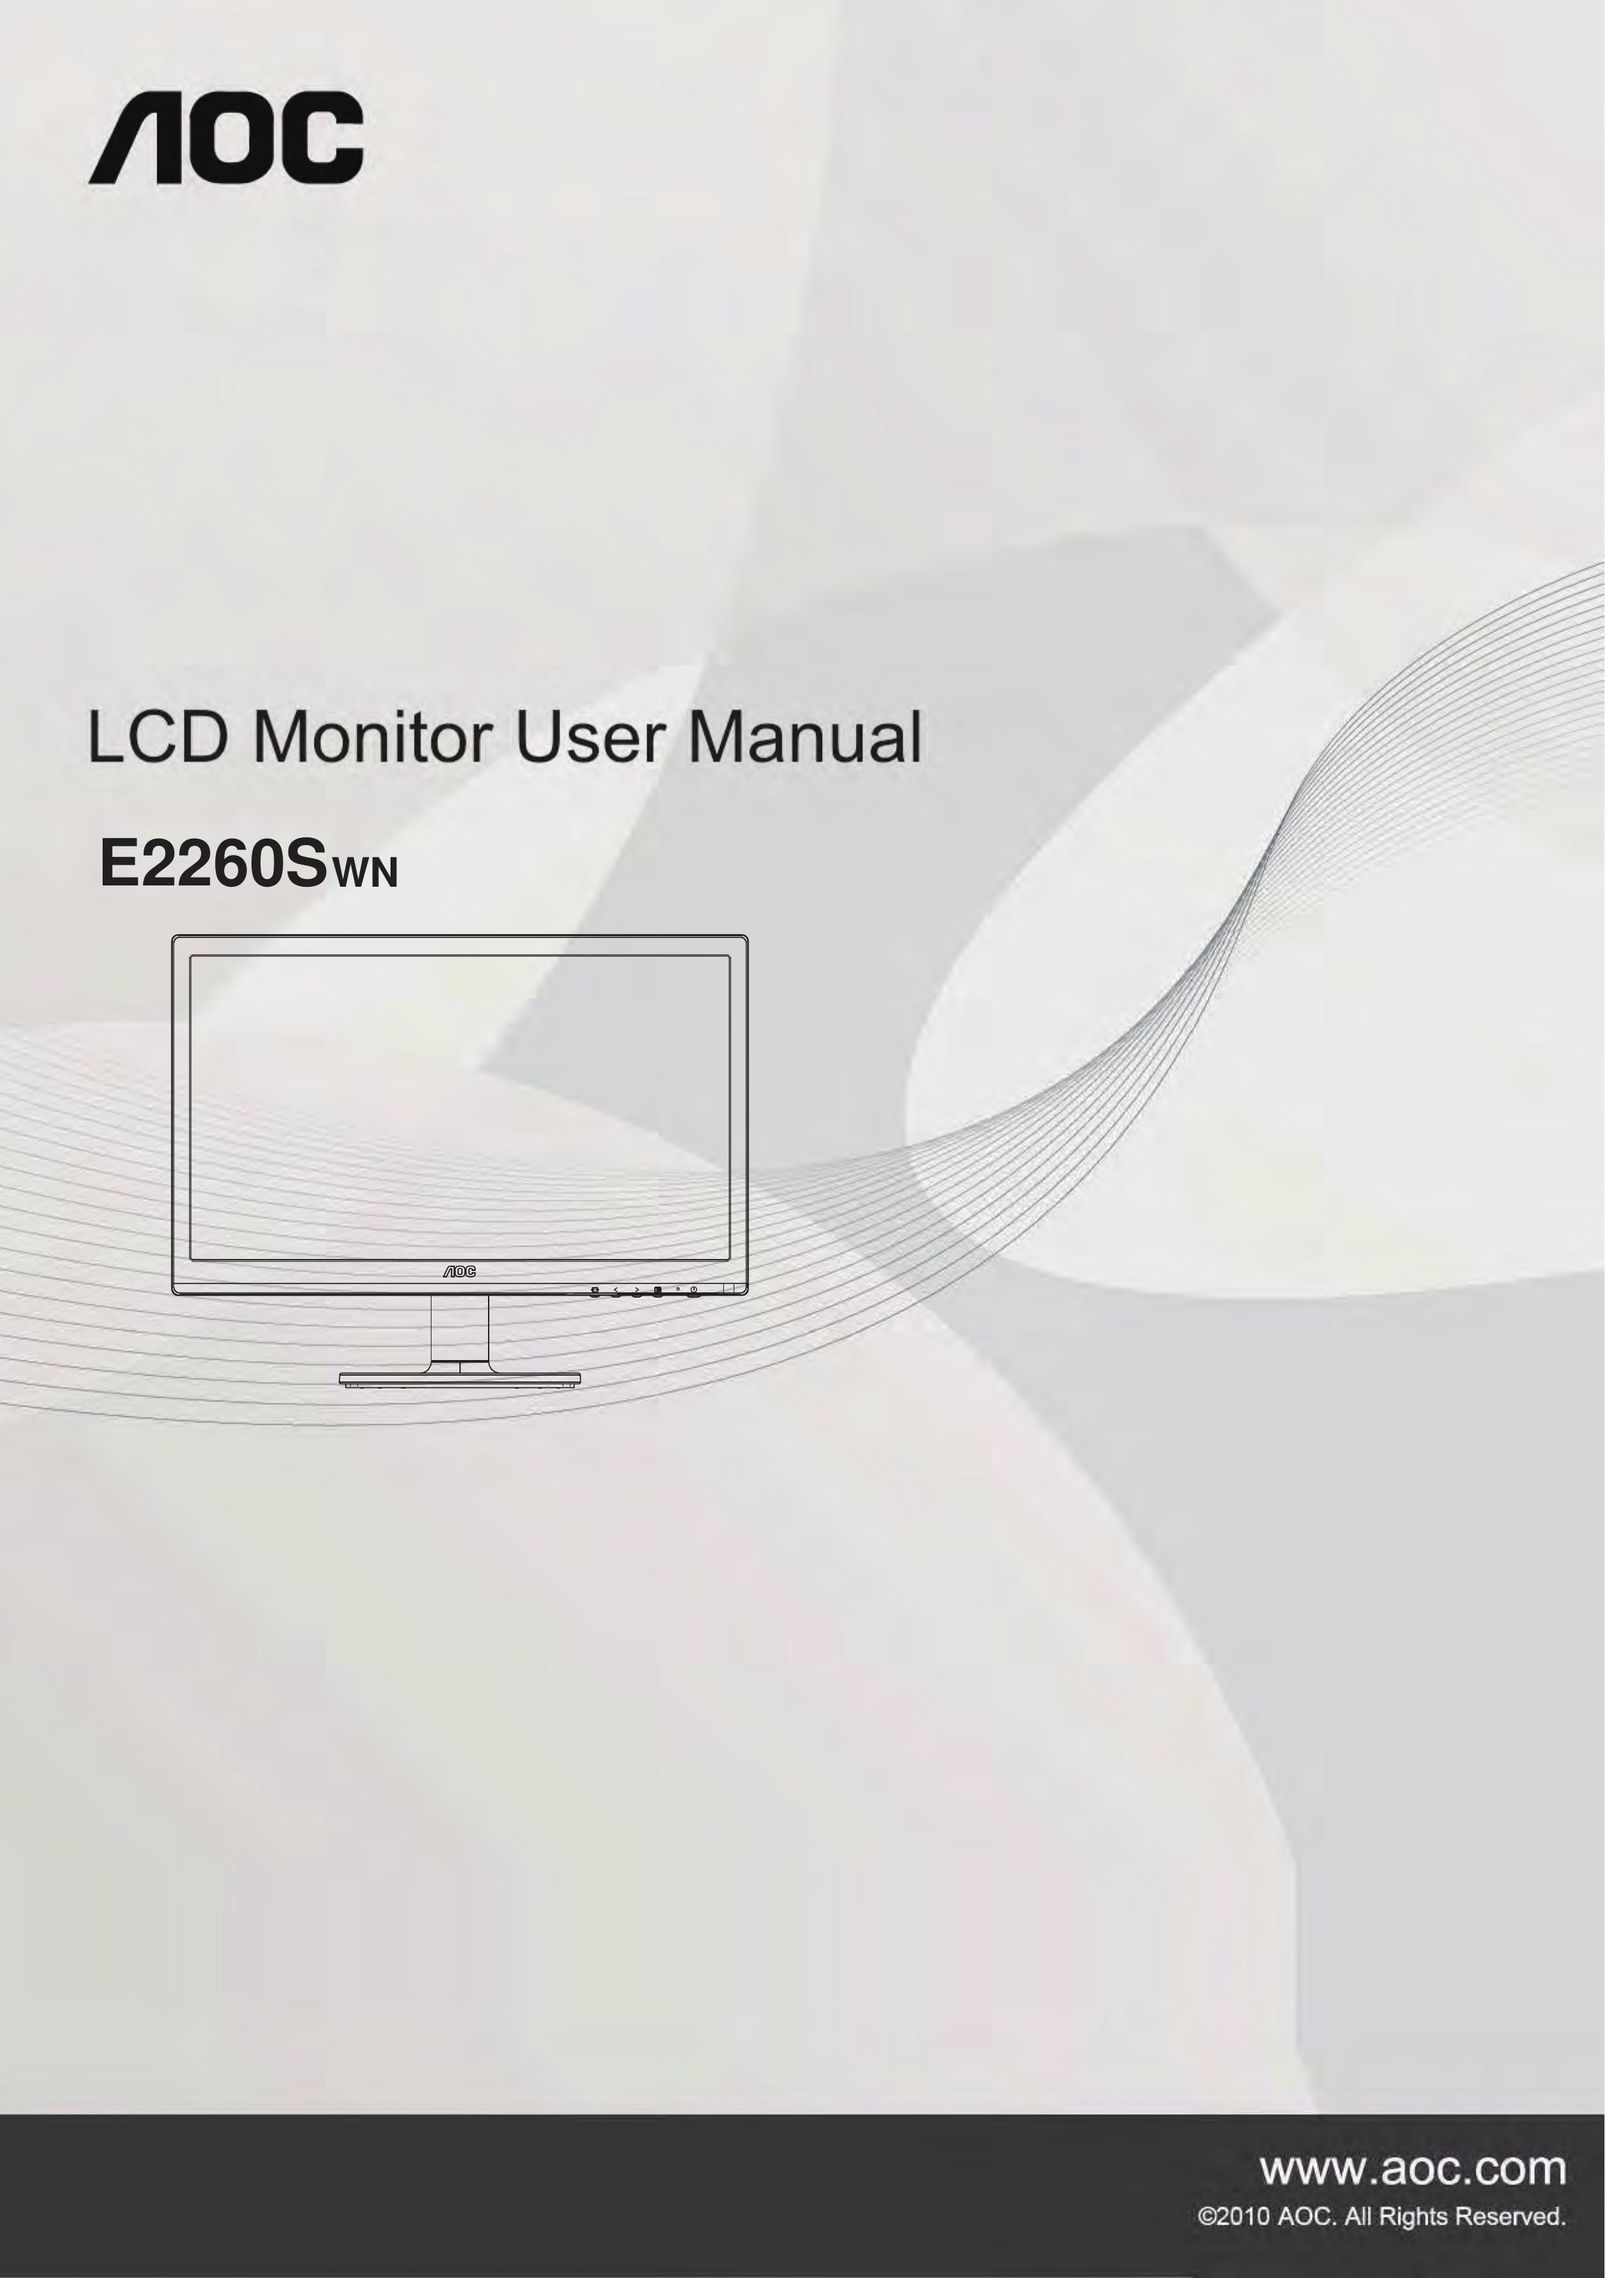 AOC E2260SWN Car Video System User Manual